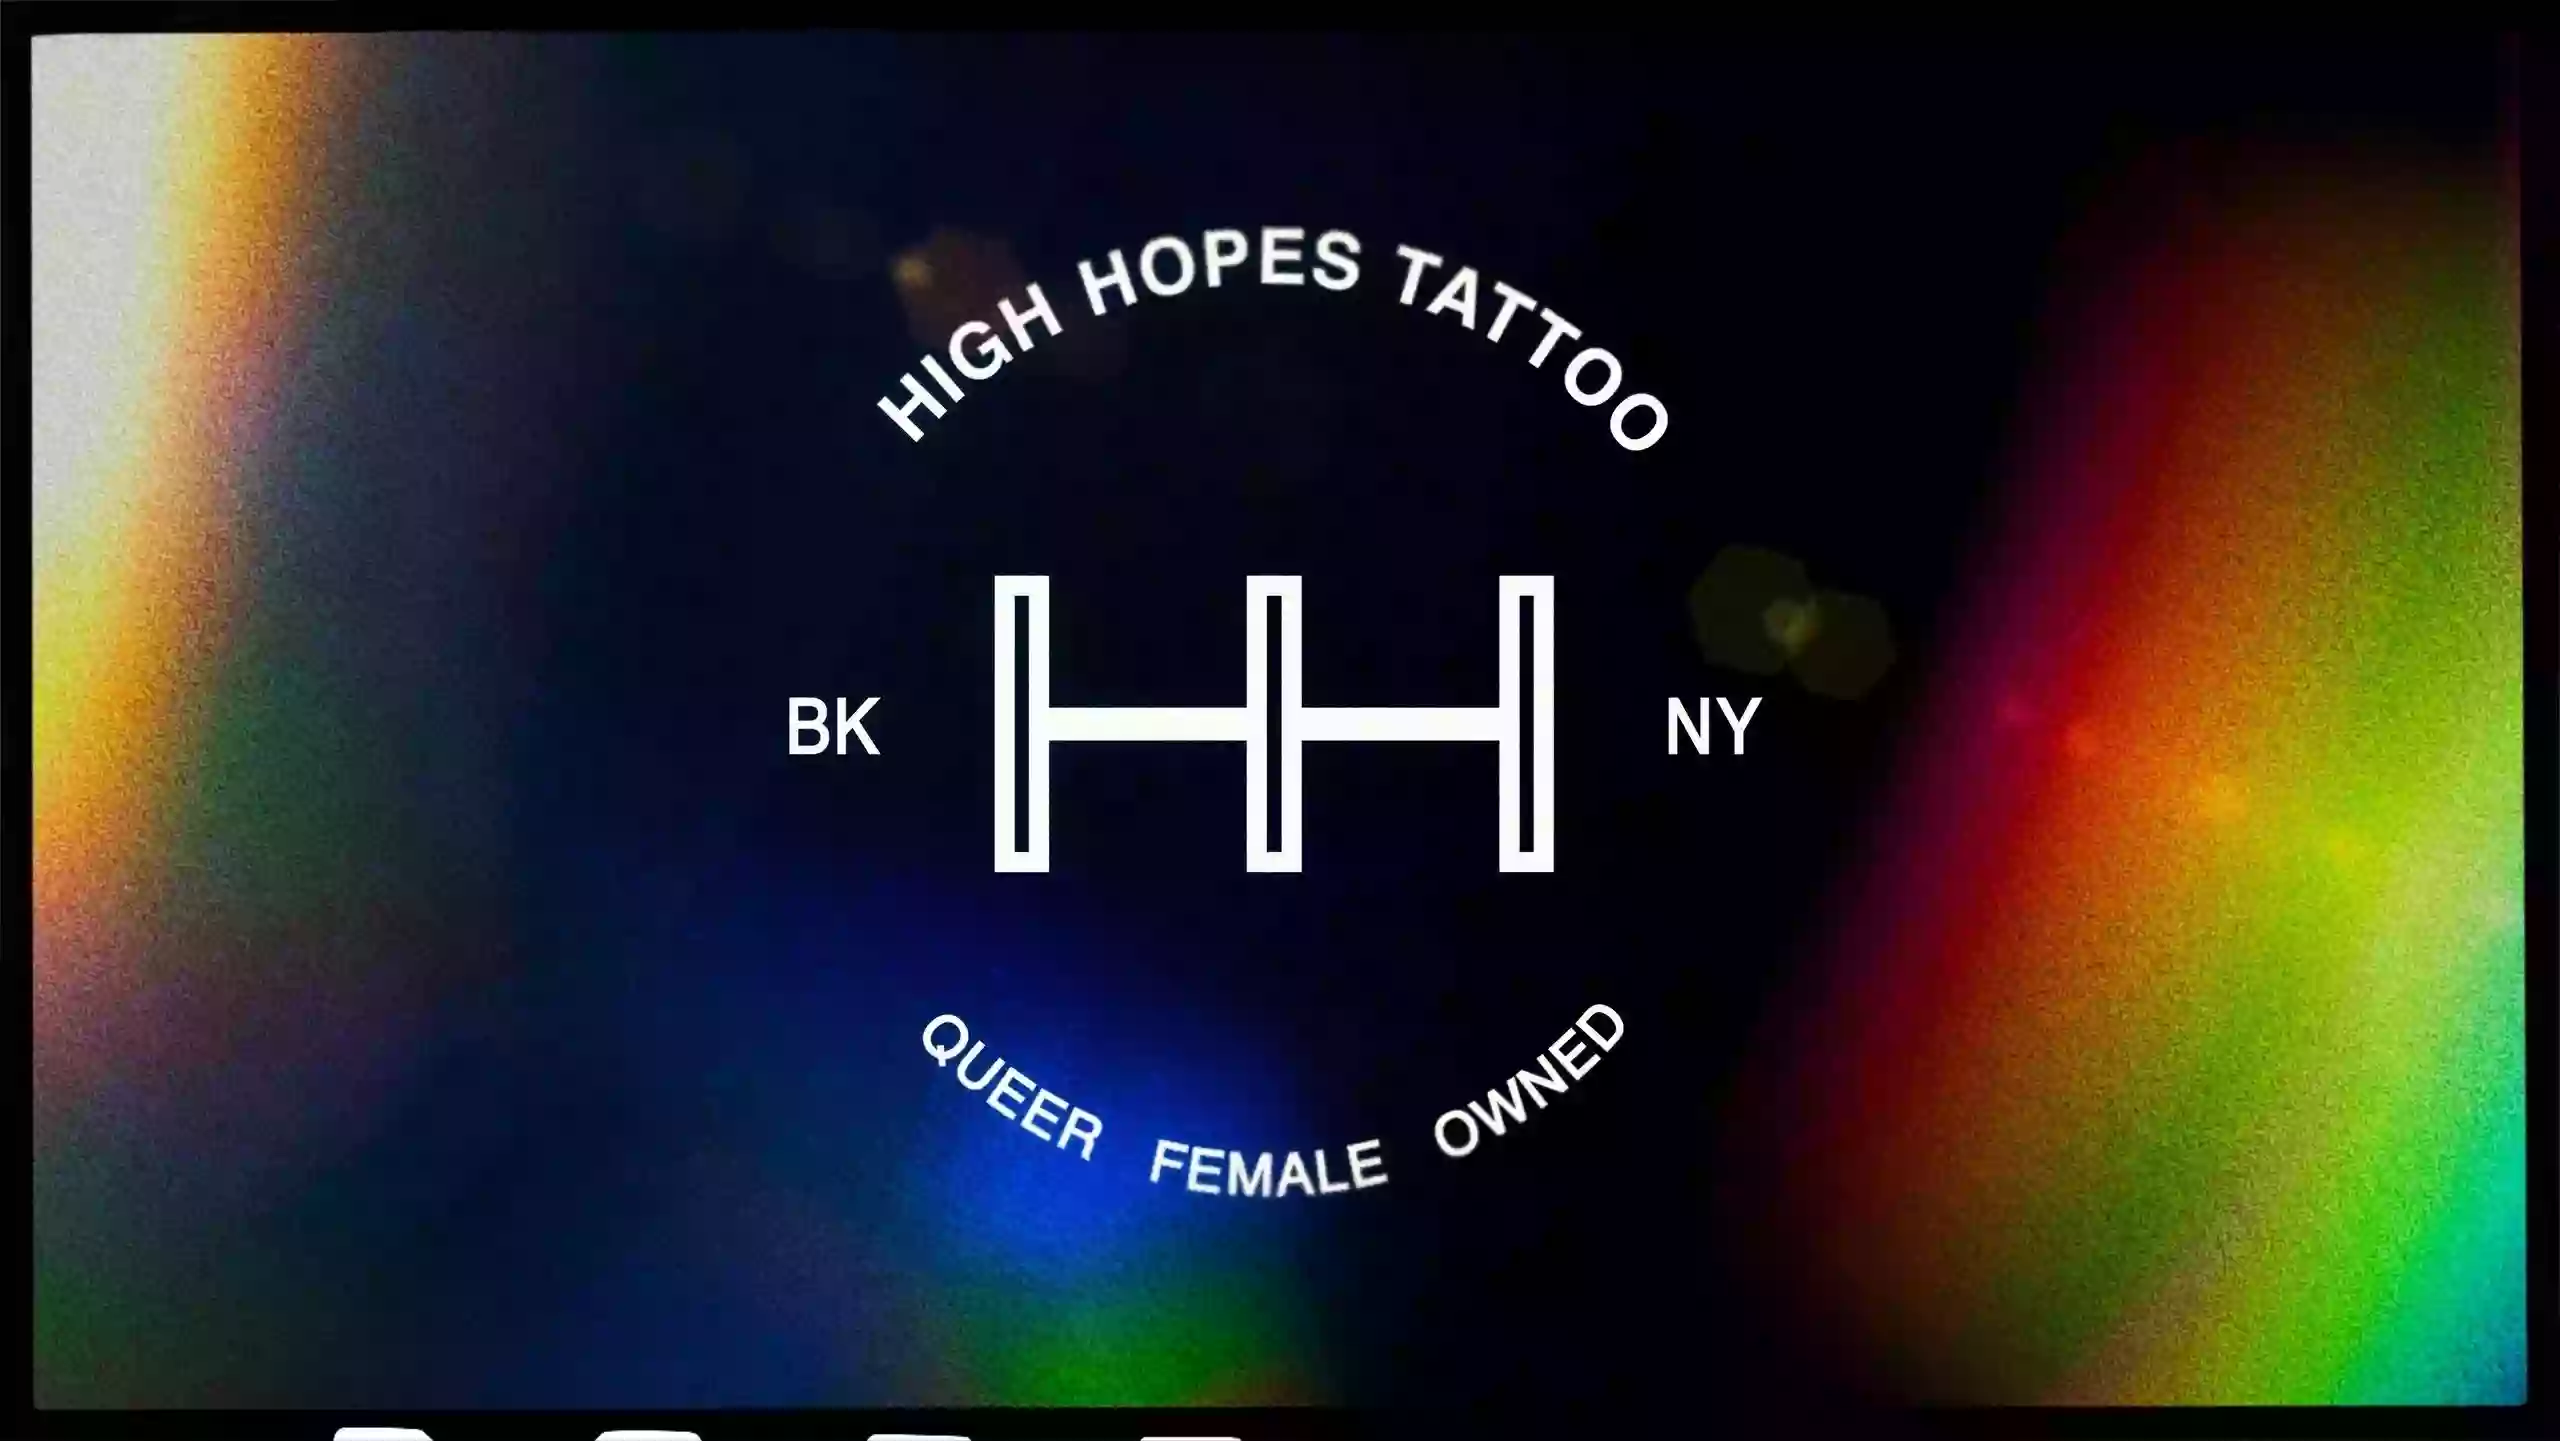 High Hopes Tattoo